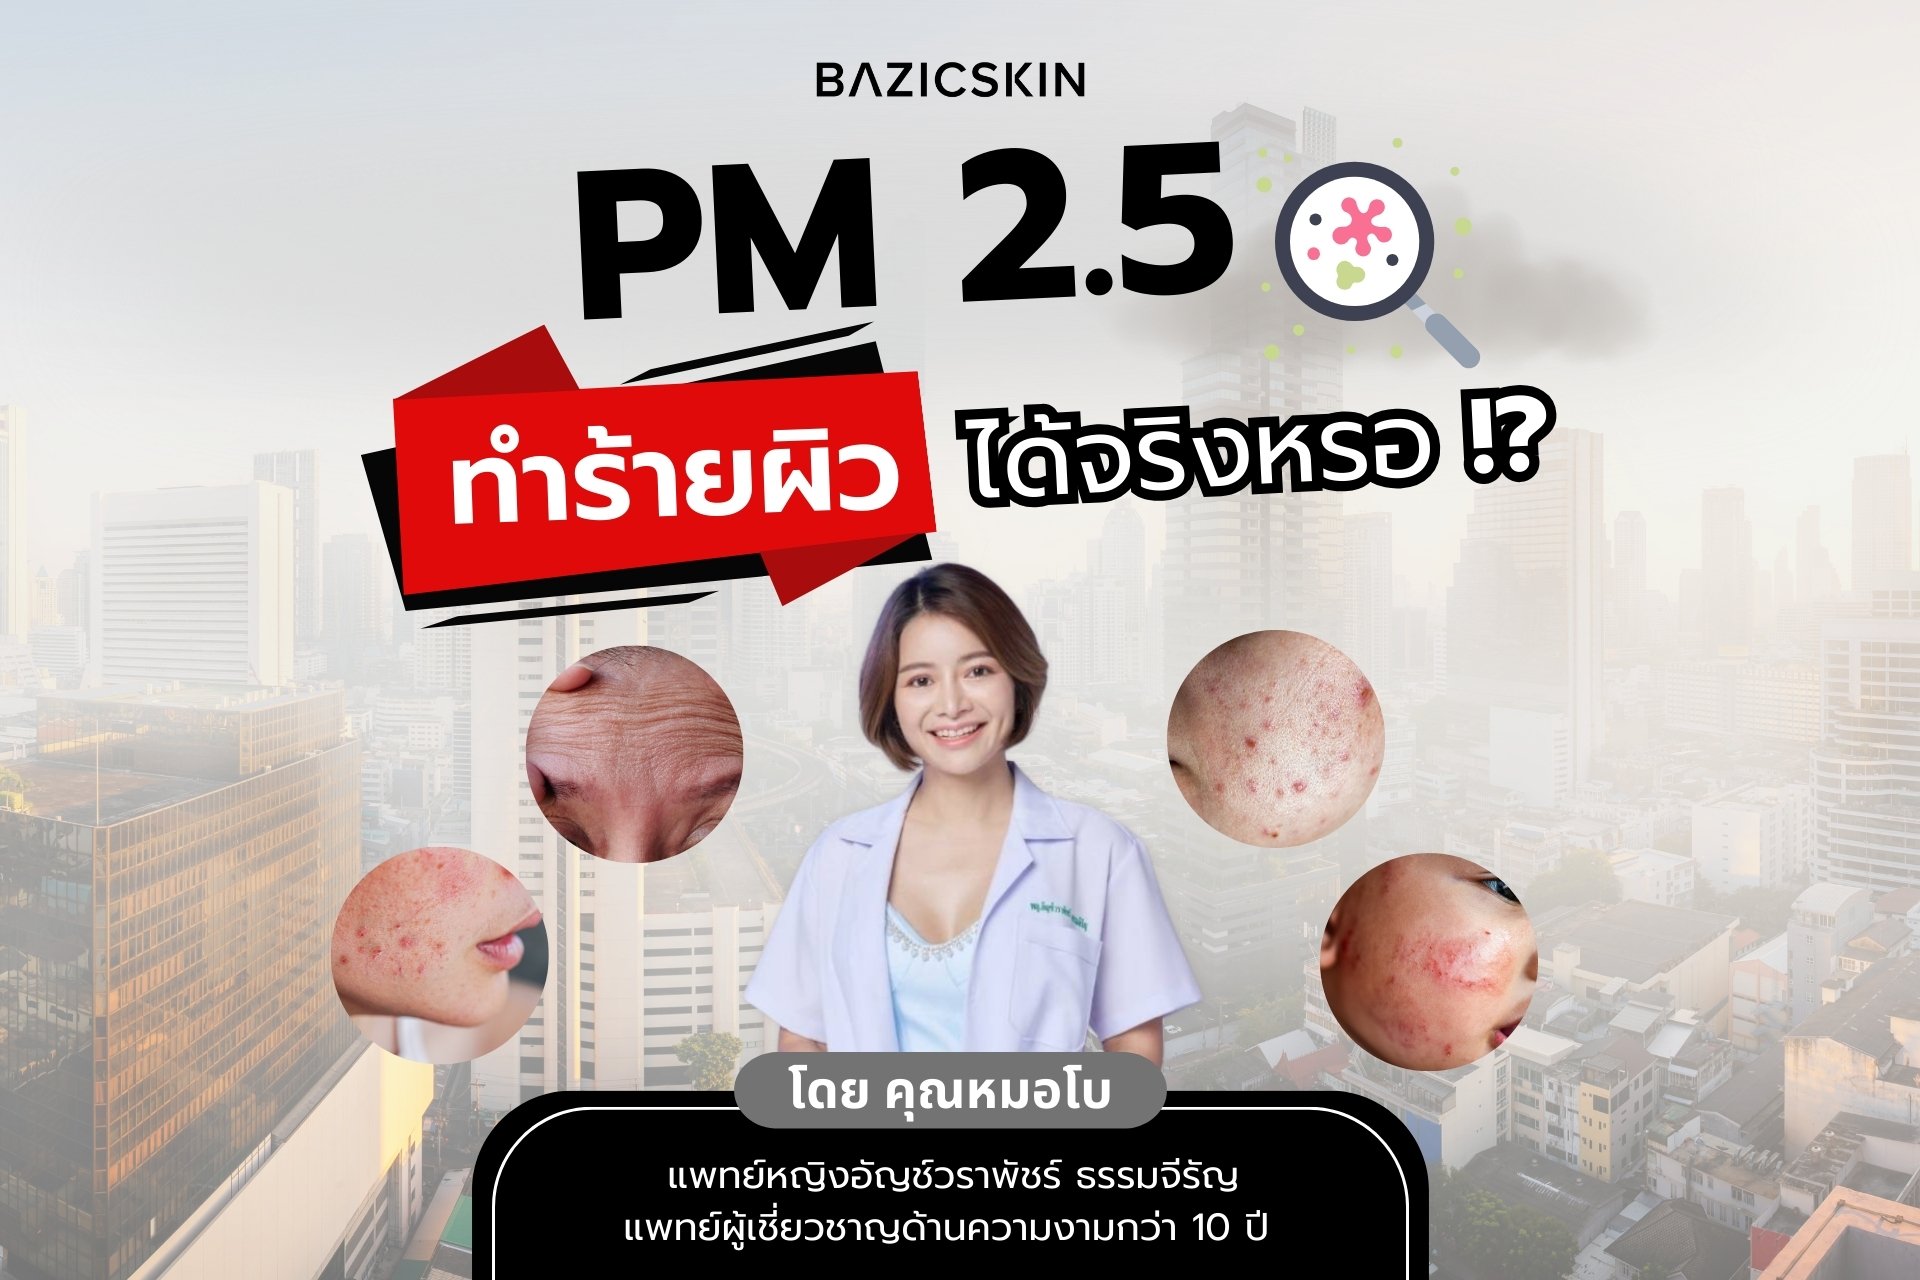 PM 2.5 ทำร้ายผิวได้จริงหรอ?